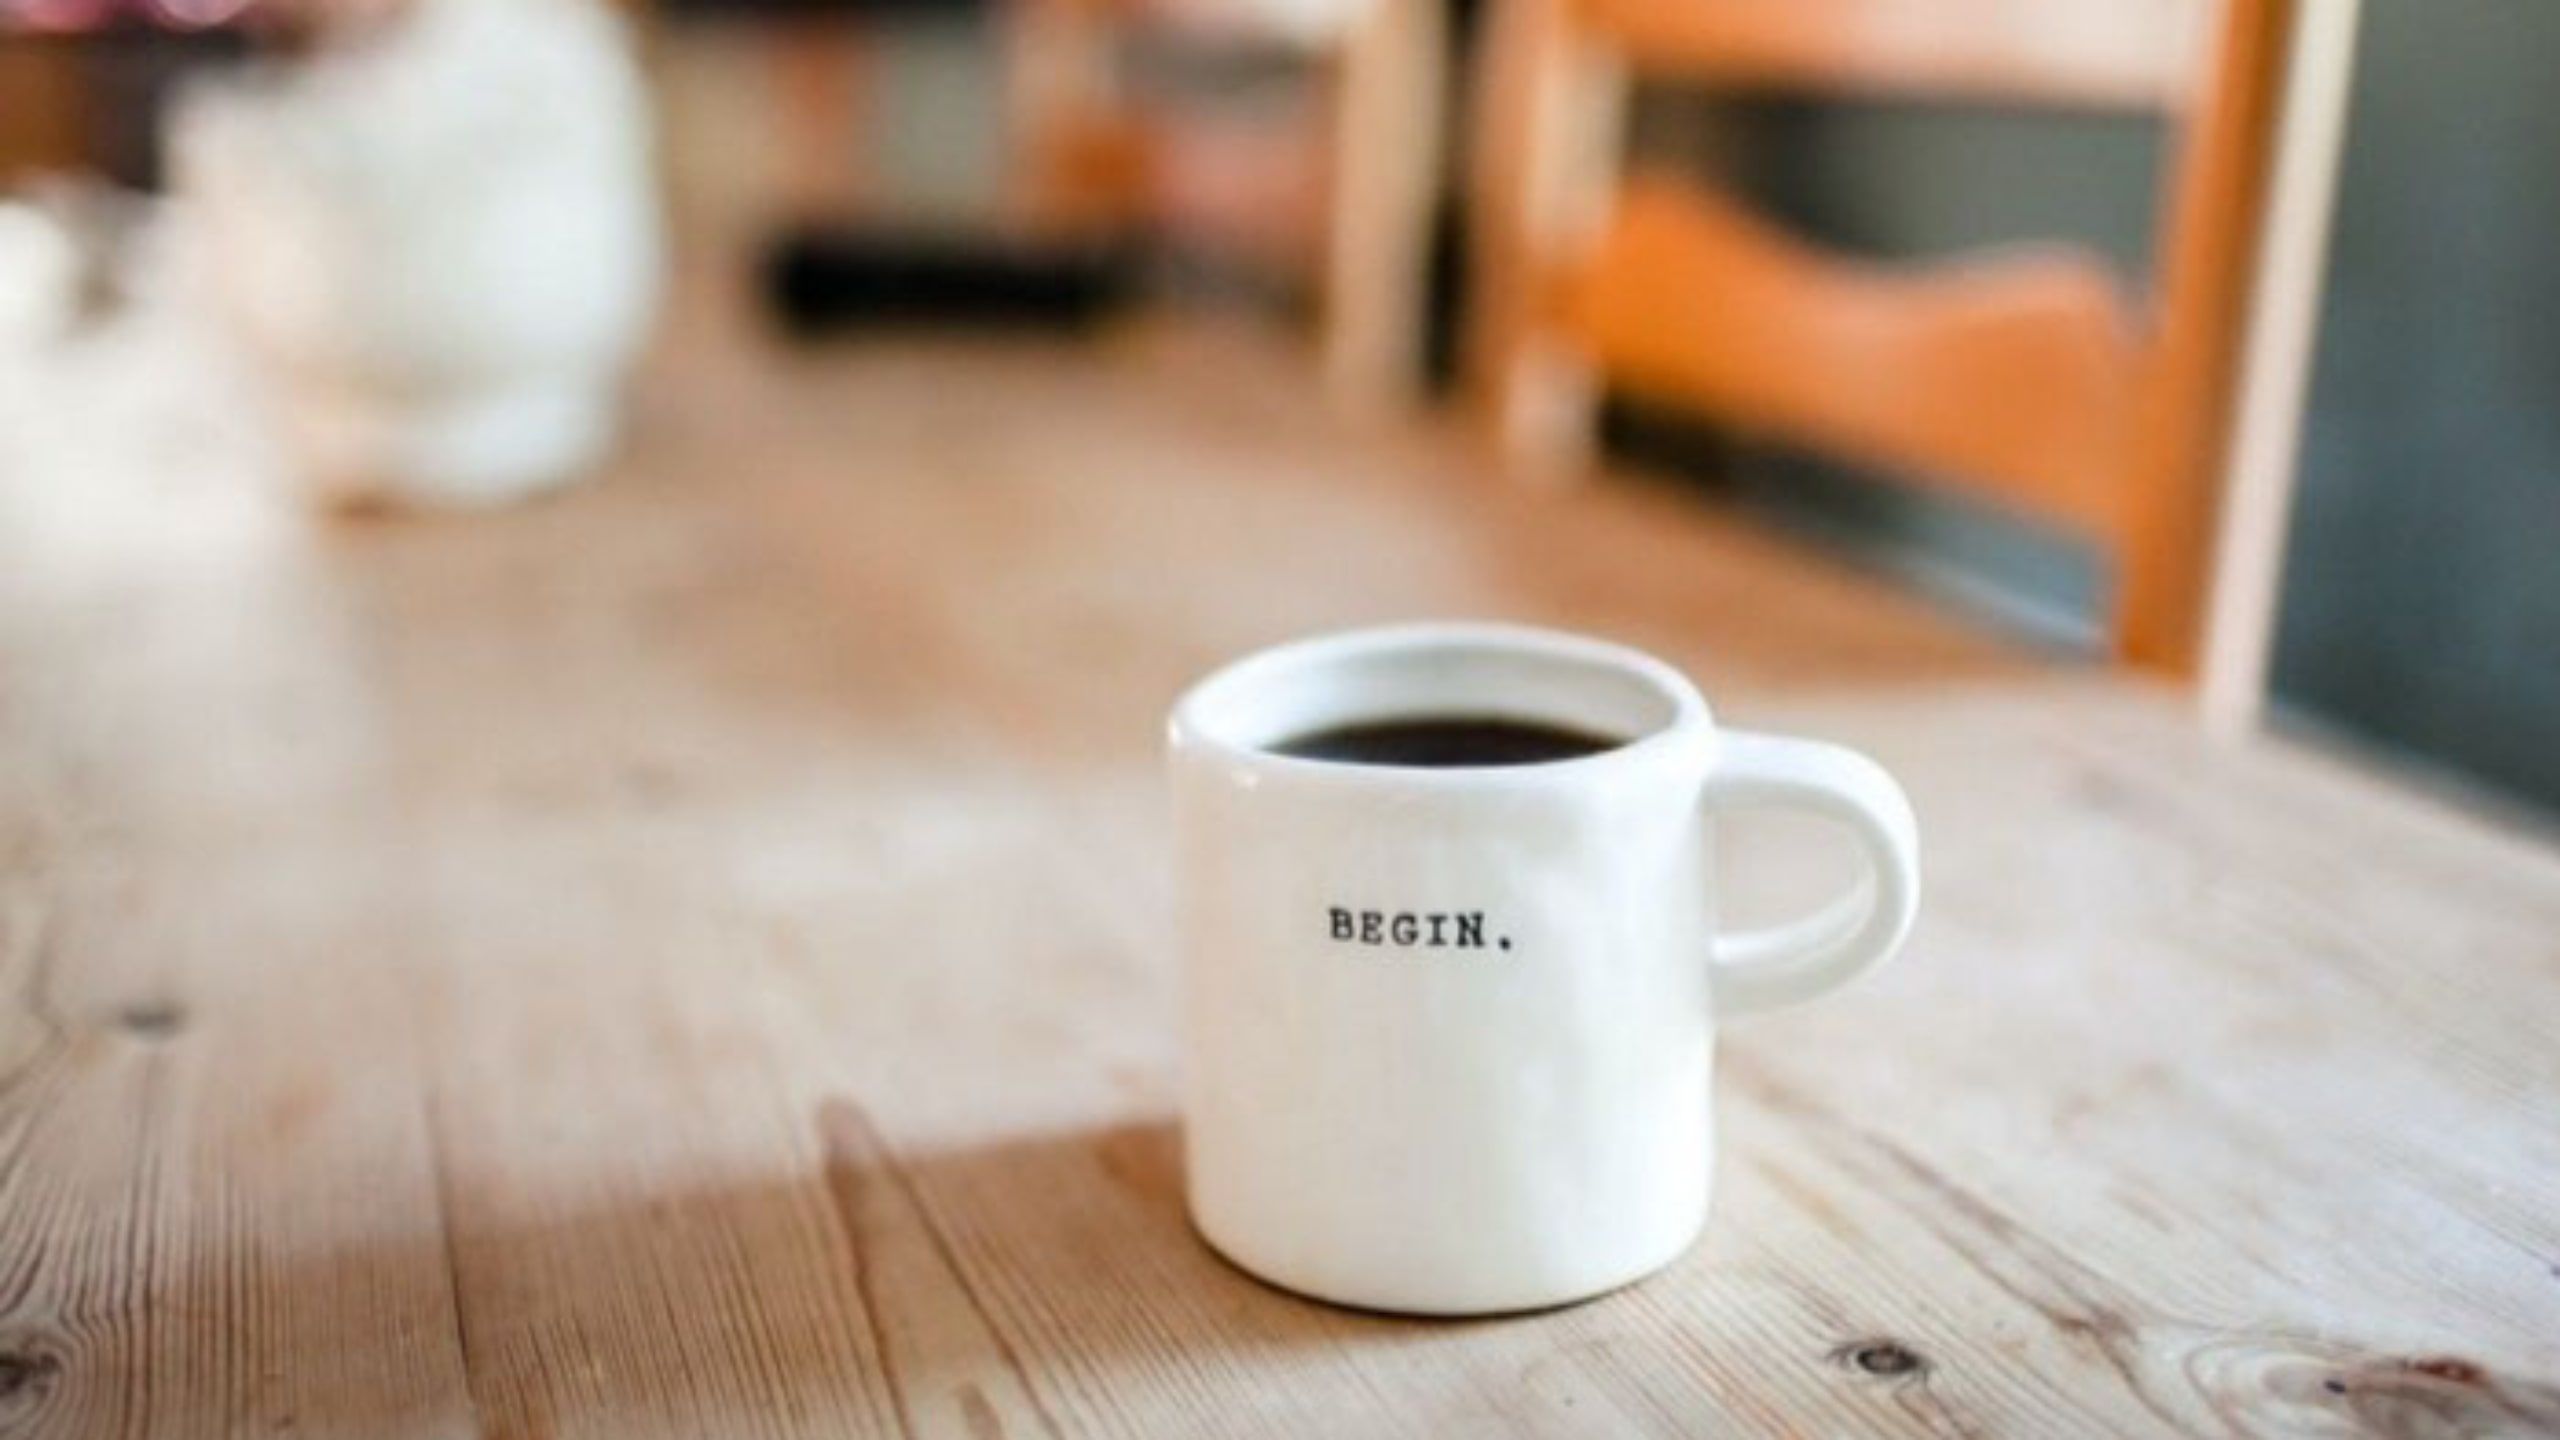 coffee mug with the word begin on it